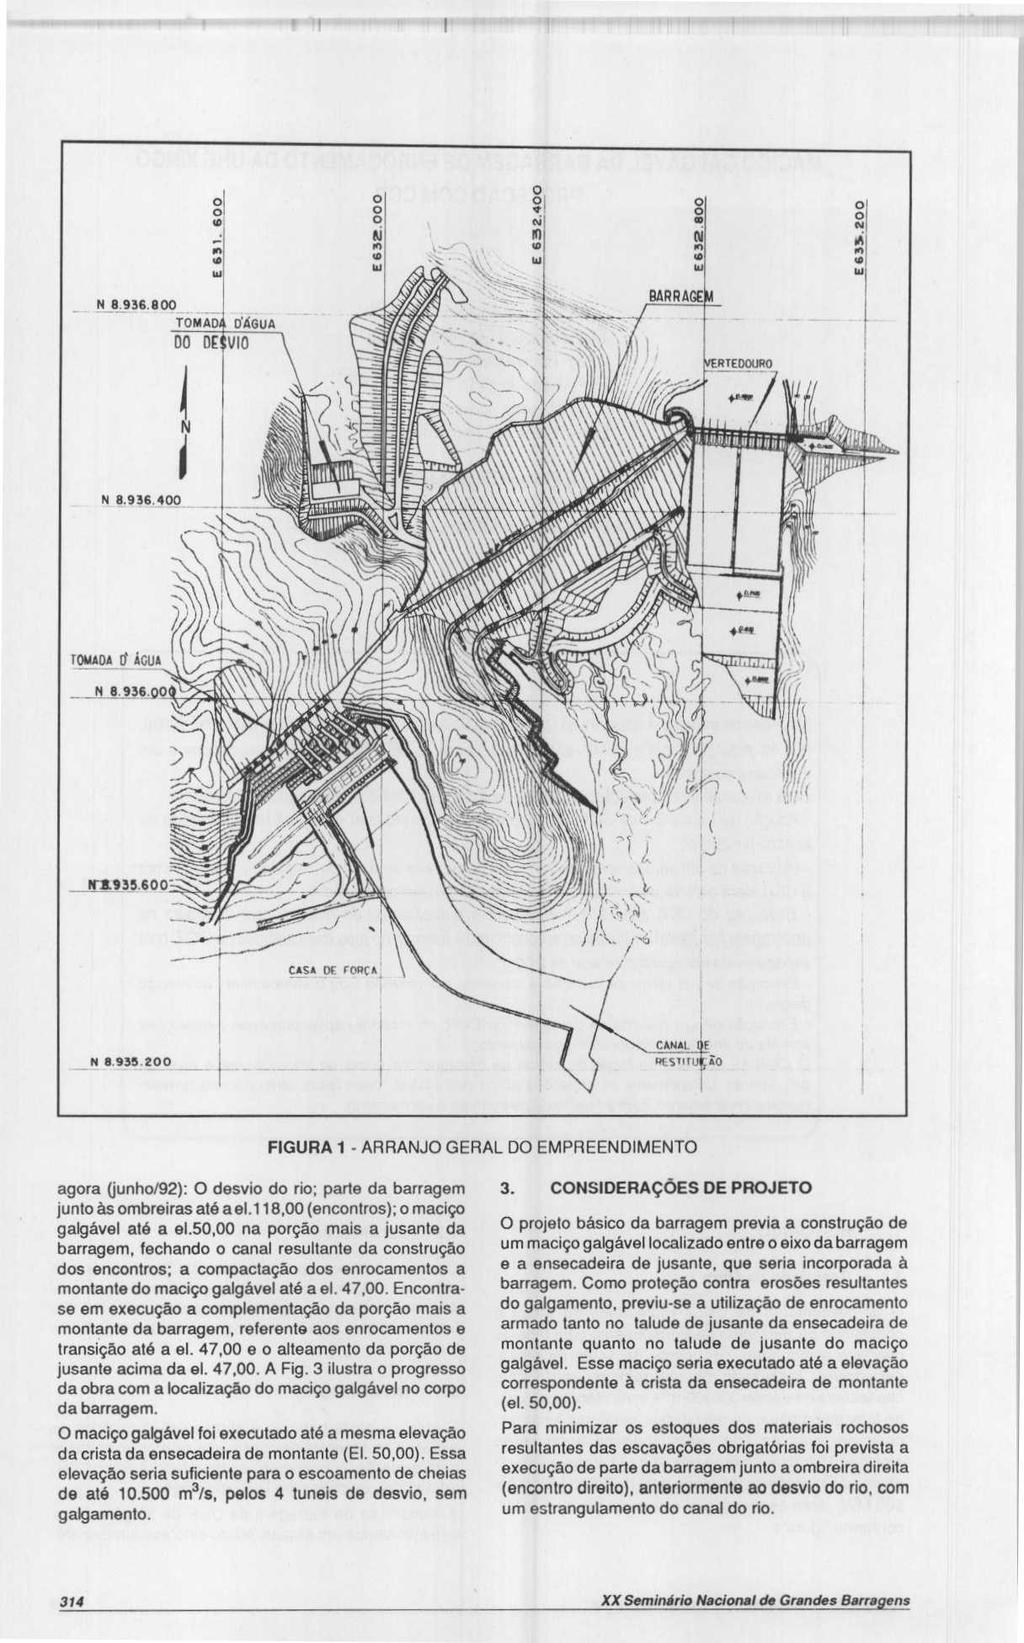 FIGURA 1 - ARRANJO GERAL DO EMPREENDIMENTO agora (junho/92): desvio do rio ; parts da barragern junto as ombreiras ate a el.118, (encontros); o macigo galgavel ate a el.